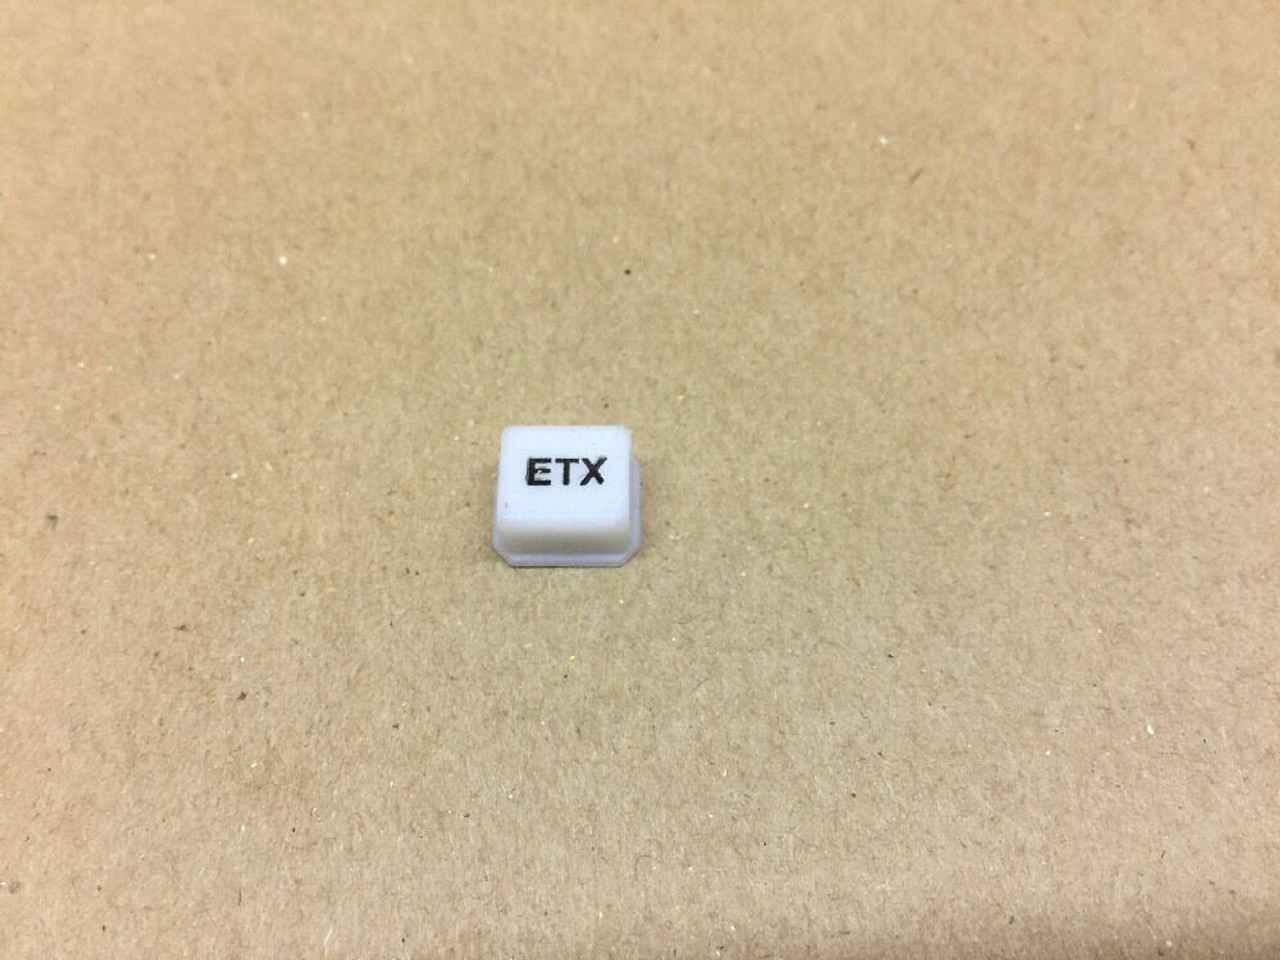 ETX Push Button 623-0717-004 Rockwell Collins White Square